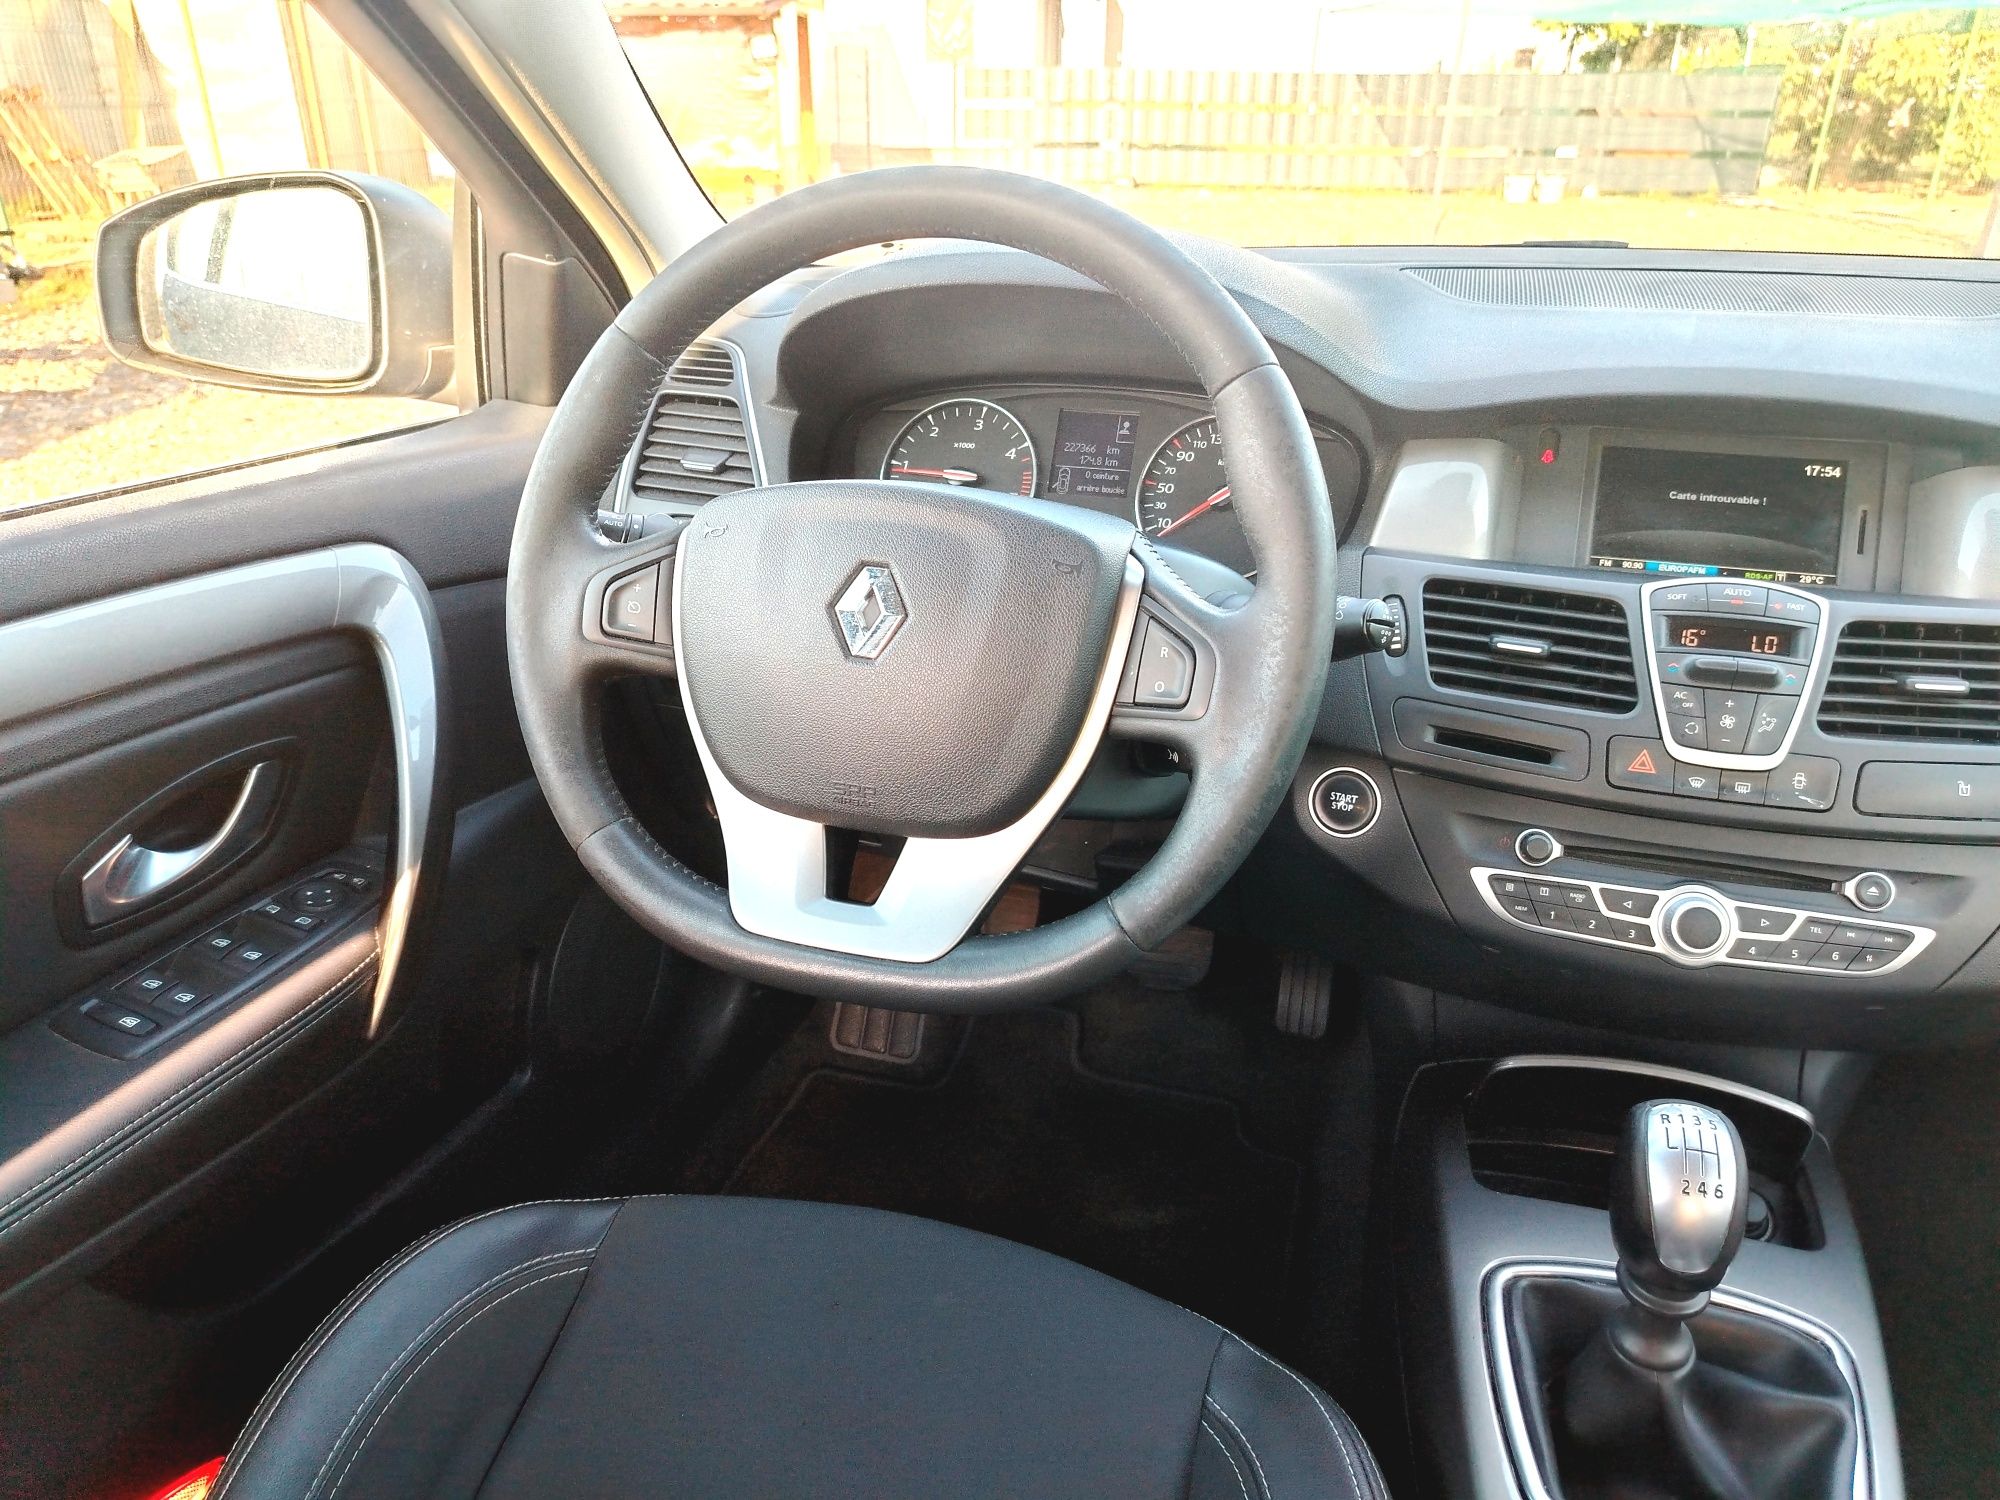 Renault Laguna 11/2011, 1.5 dCI, 110cp, Black Edition